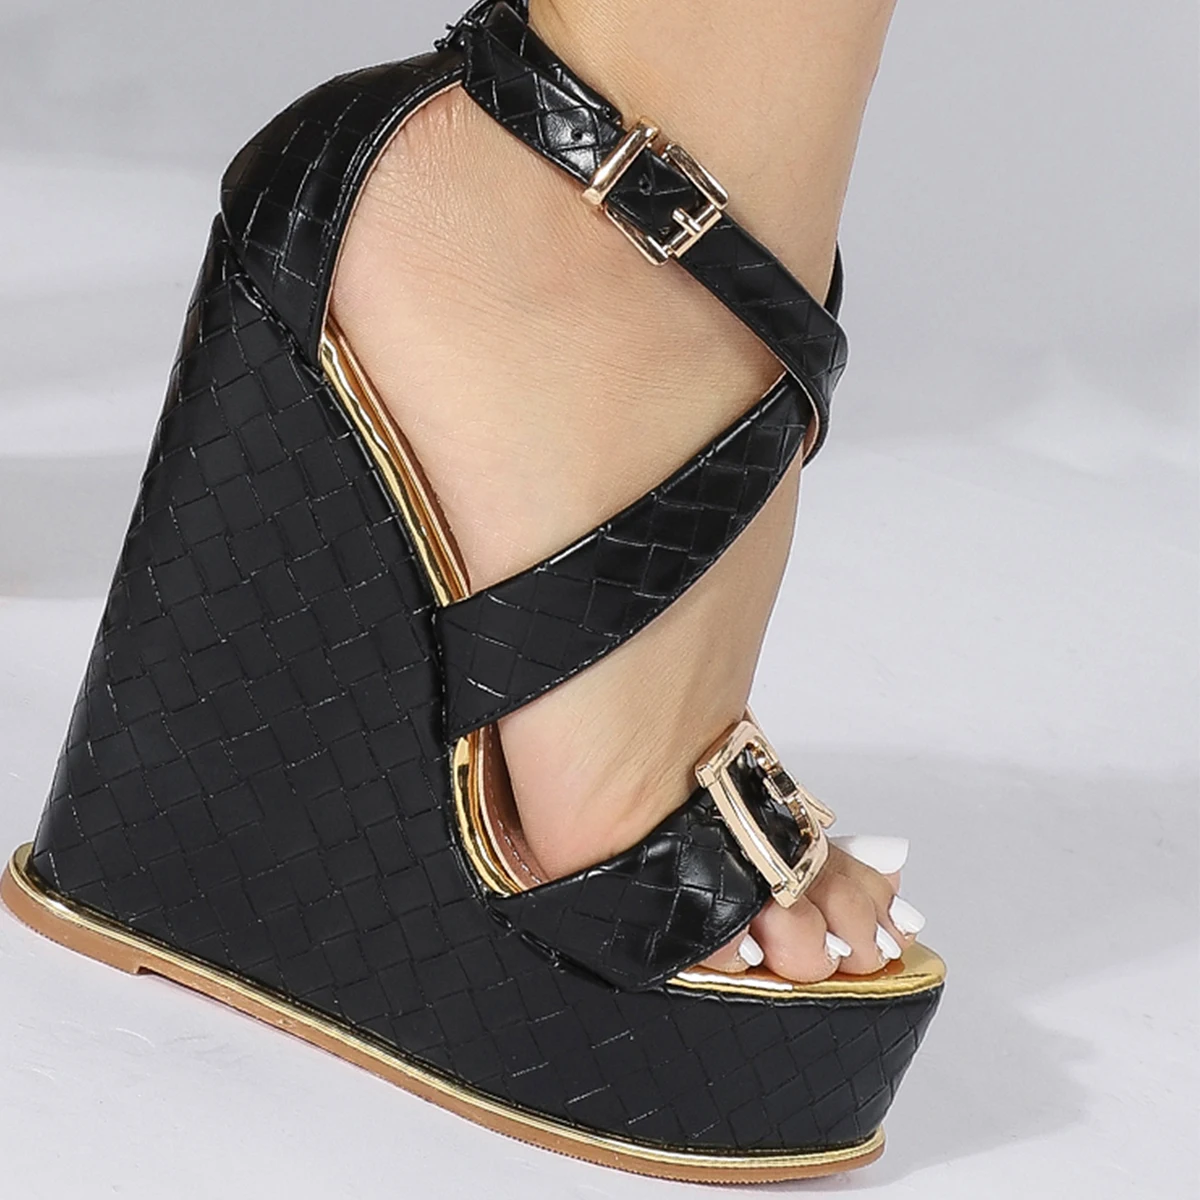 

Baldauren Women Sandals High Heels Open Toe Cross Strap Fashion Sandals Wedge Platform Black High Heel Sandals